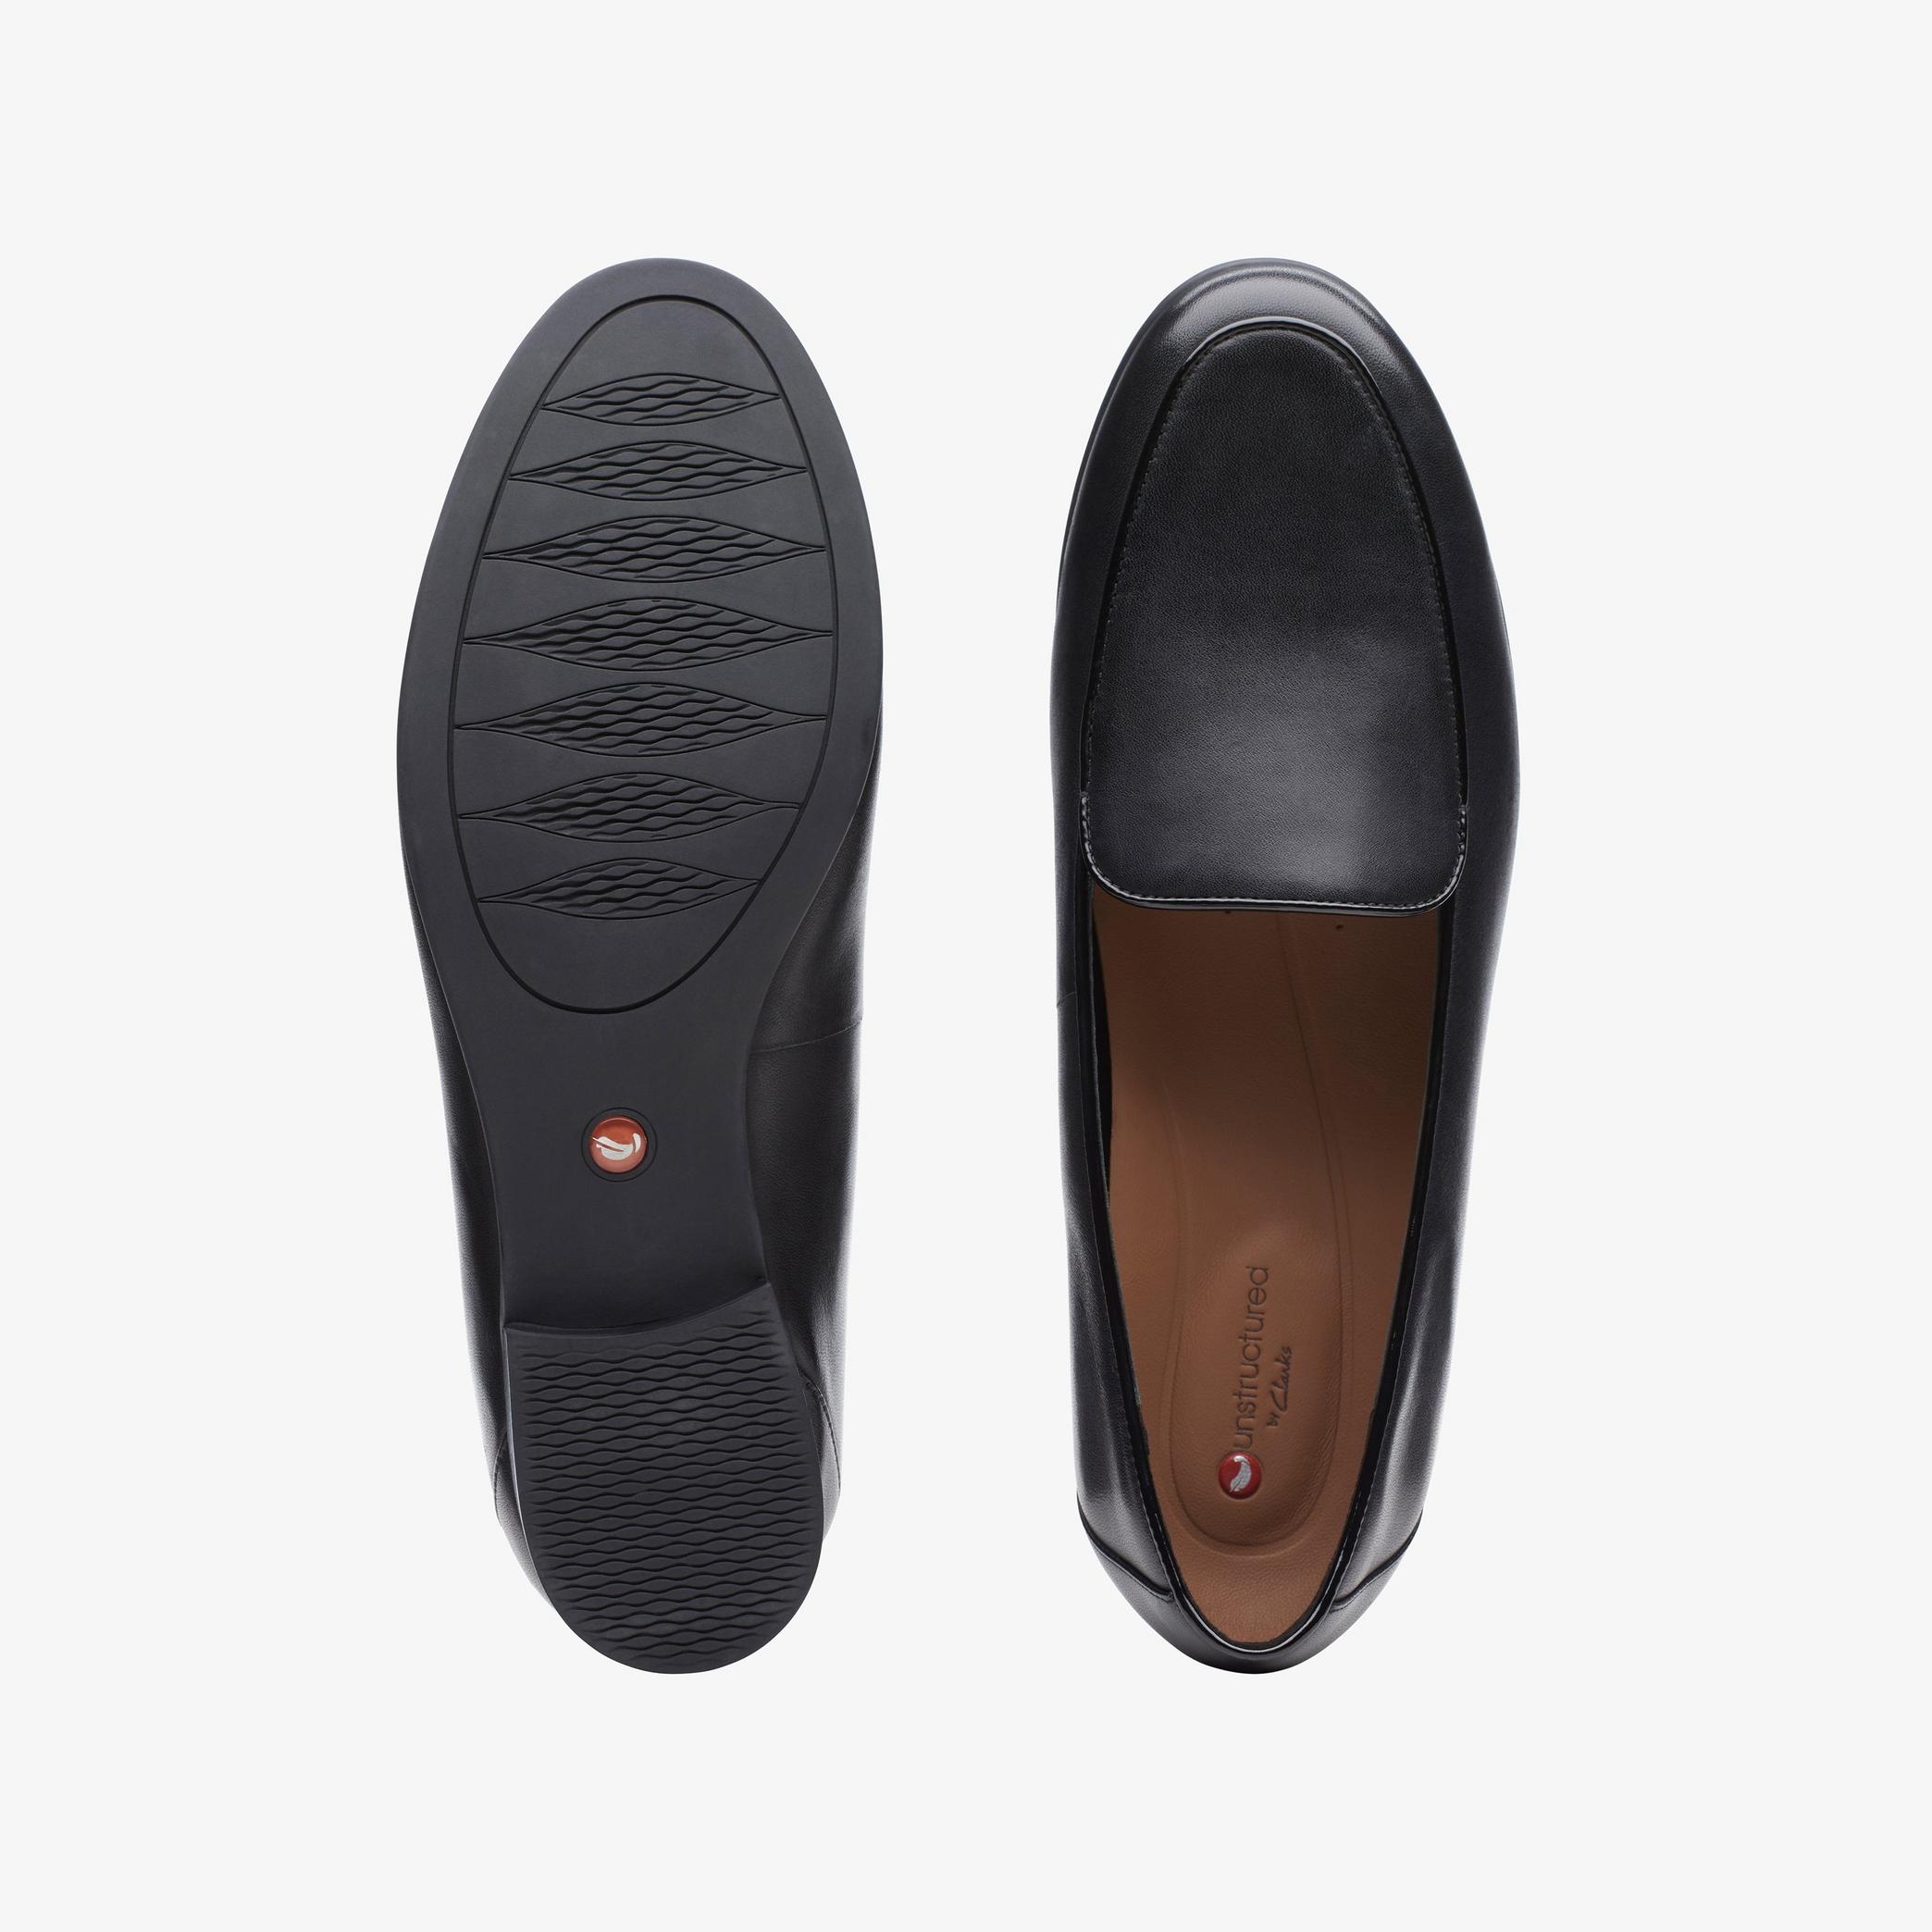 Womens Un Blush Ease Black Slip On Shoes | Clarks Outlet